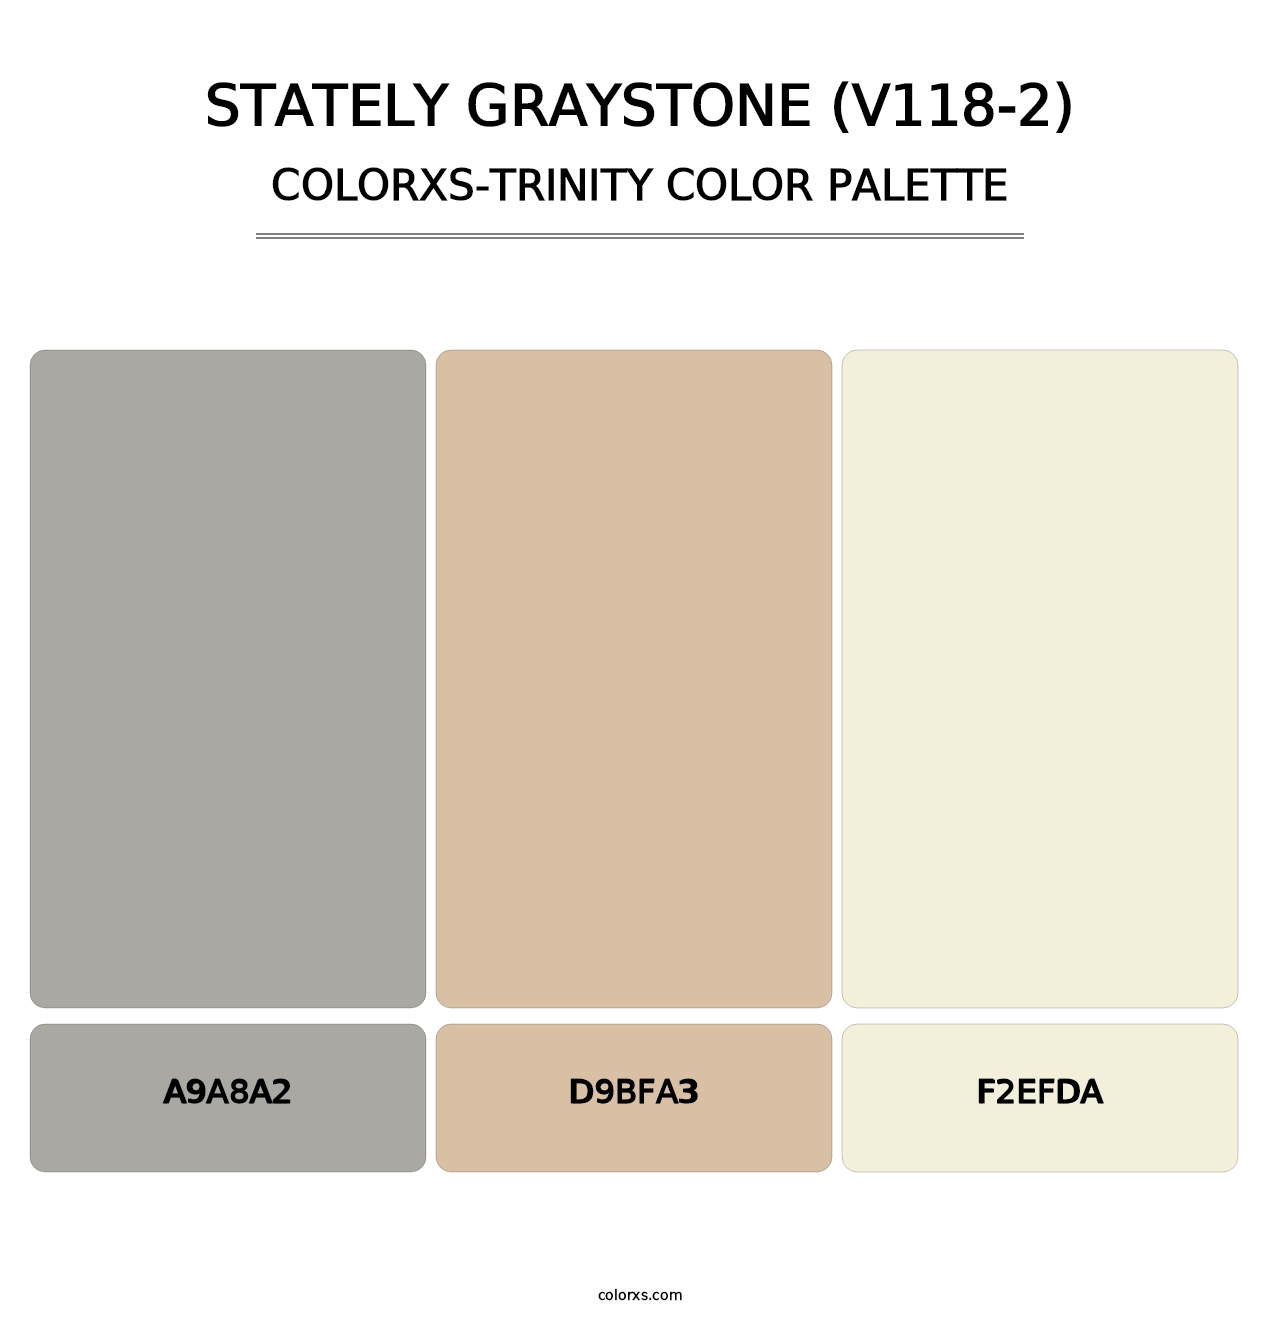 Stately Graystone (V118-2) - Colorxs Trinity Palette